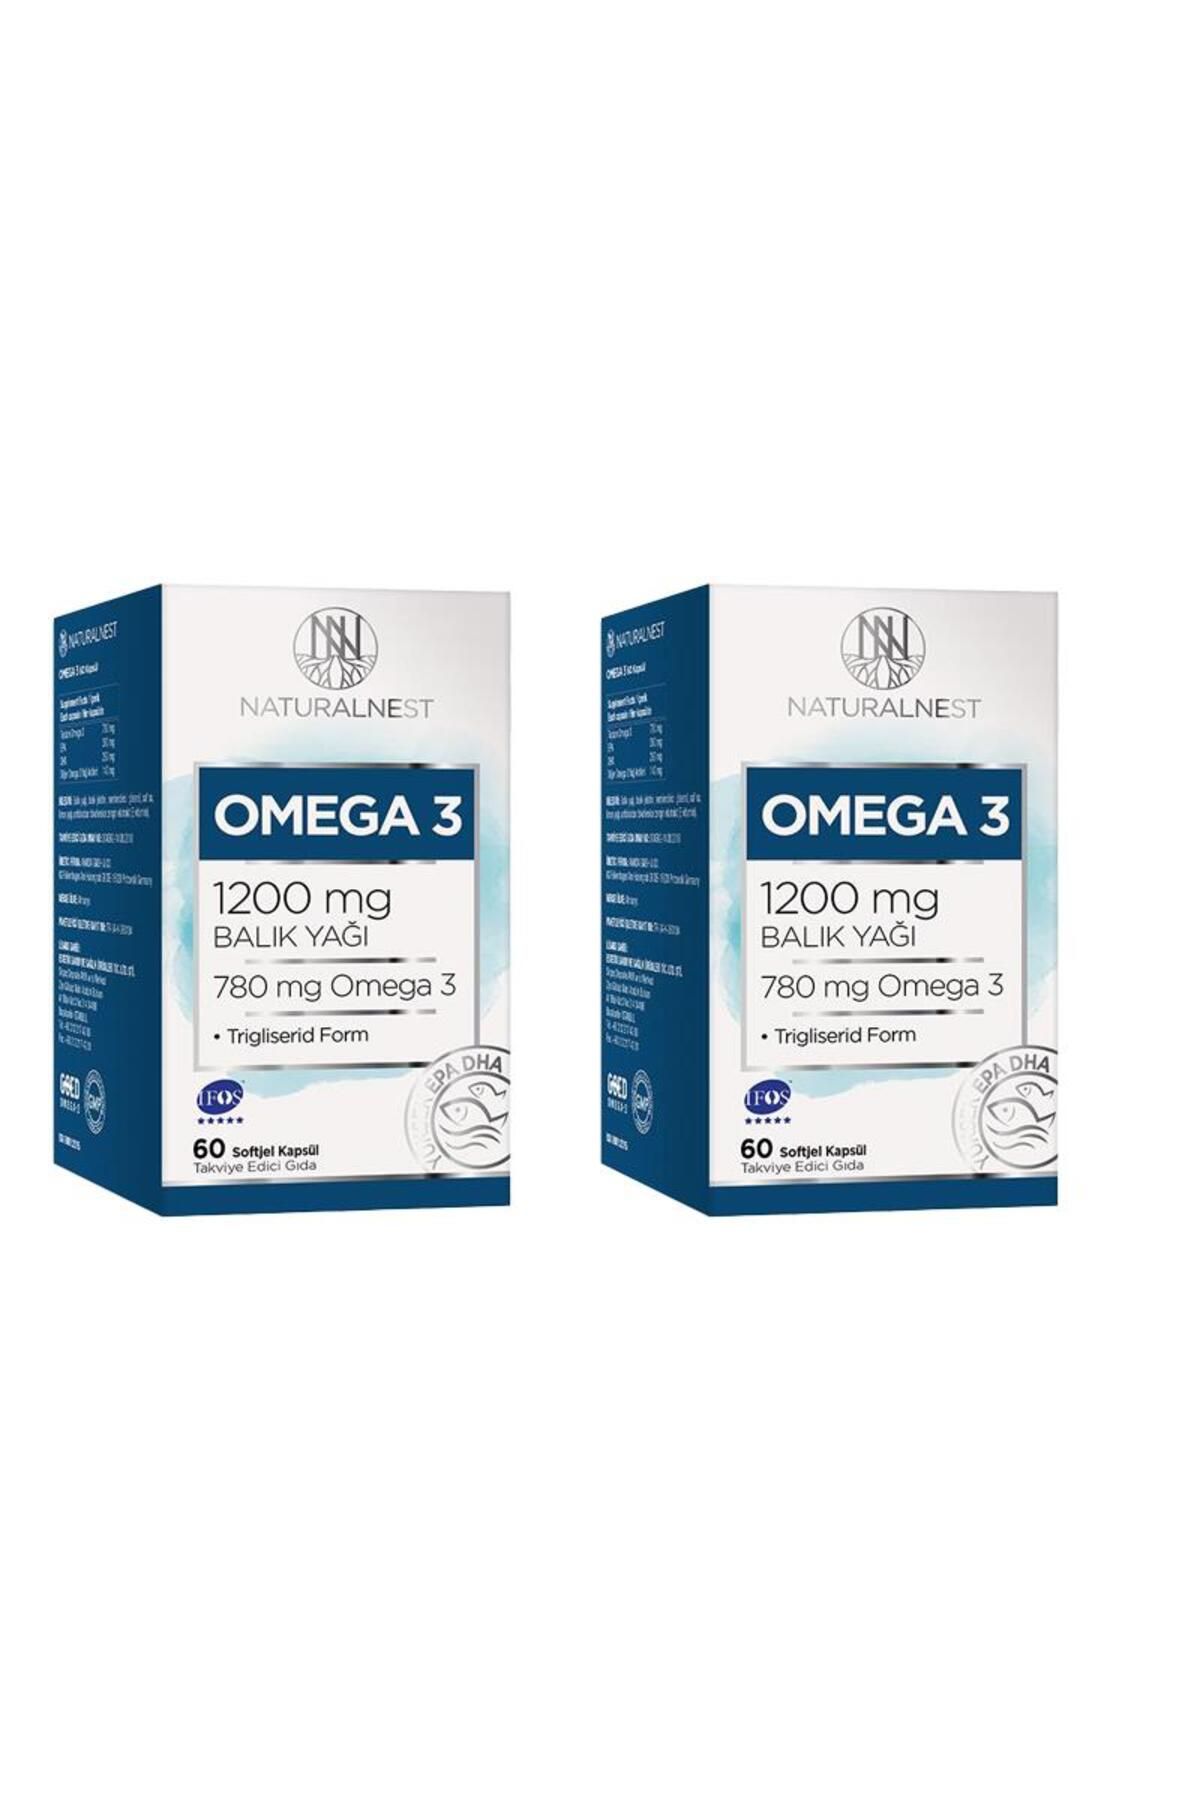 Natural Nest Omega 3 Balık Yağı 1200 mg 60 Kapsül 2 Kutu